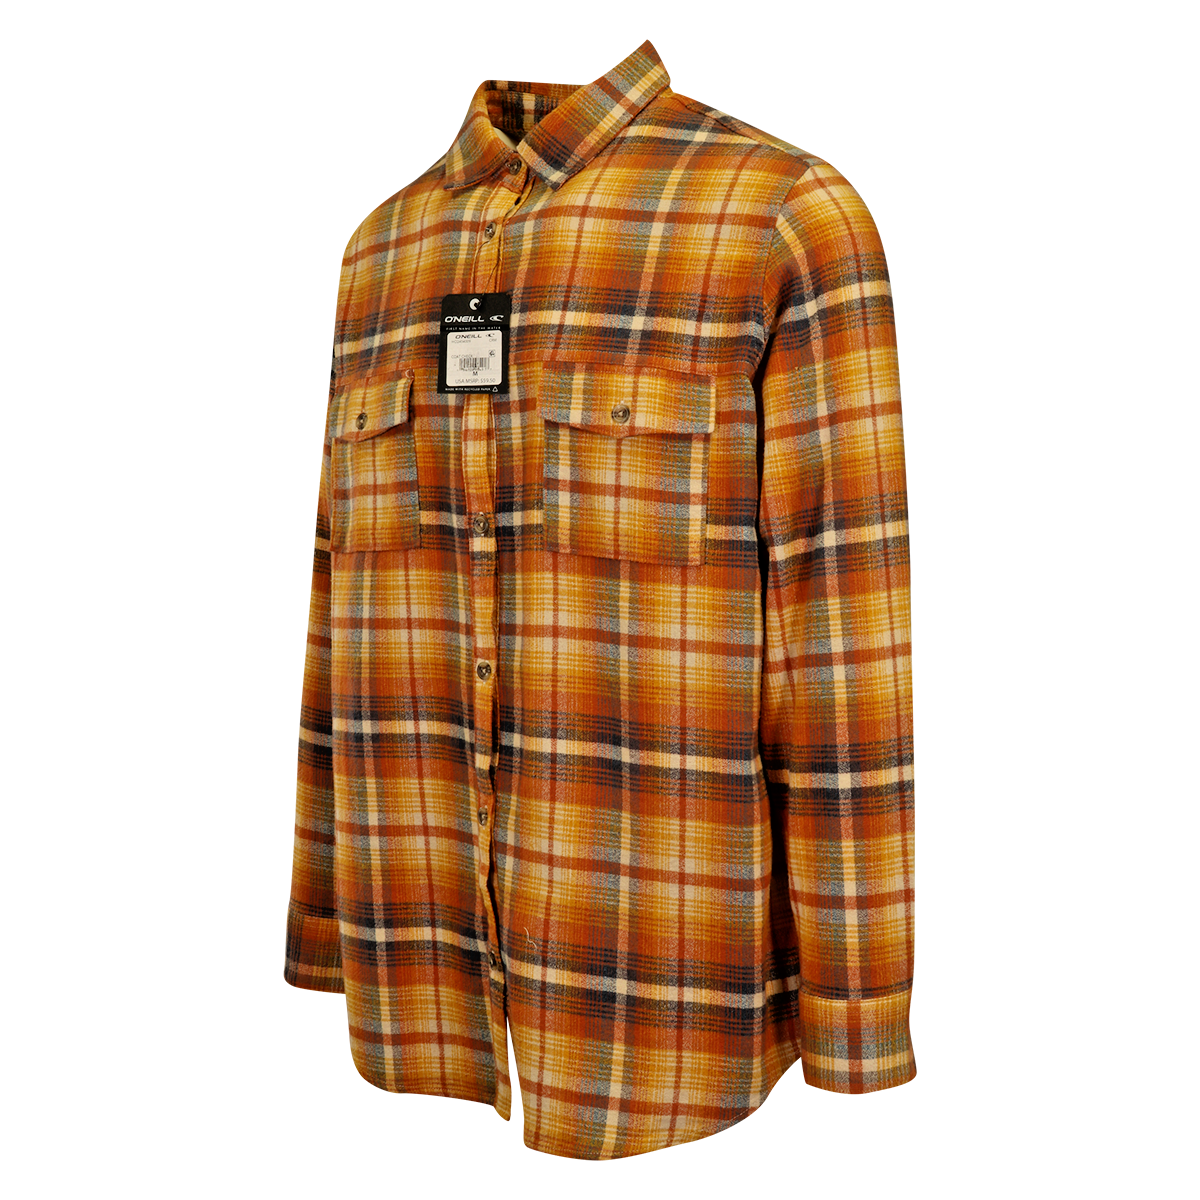 O'Neill Women's Flannel Shirt Sunshine Yellow Coat Check L/S (S15)